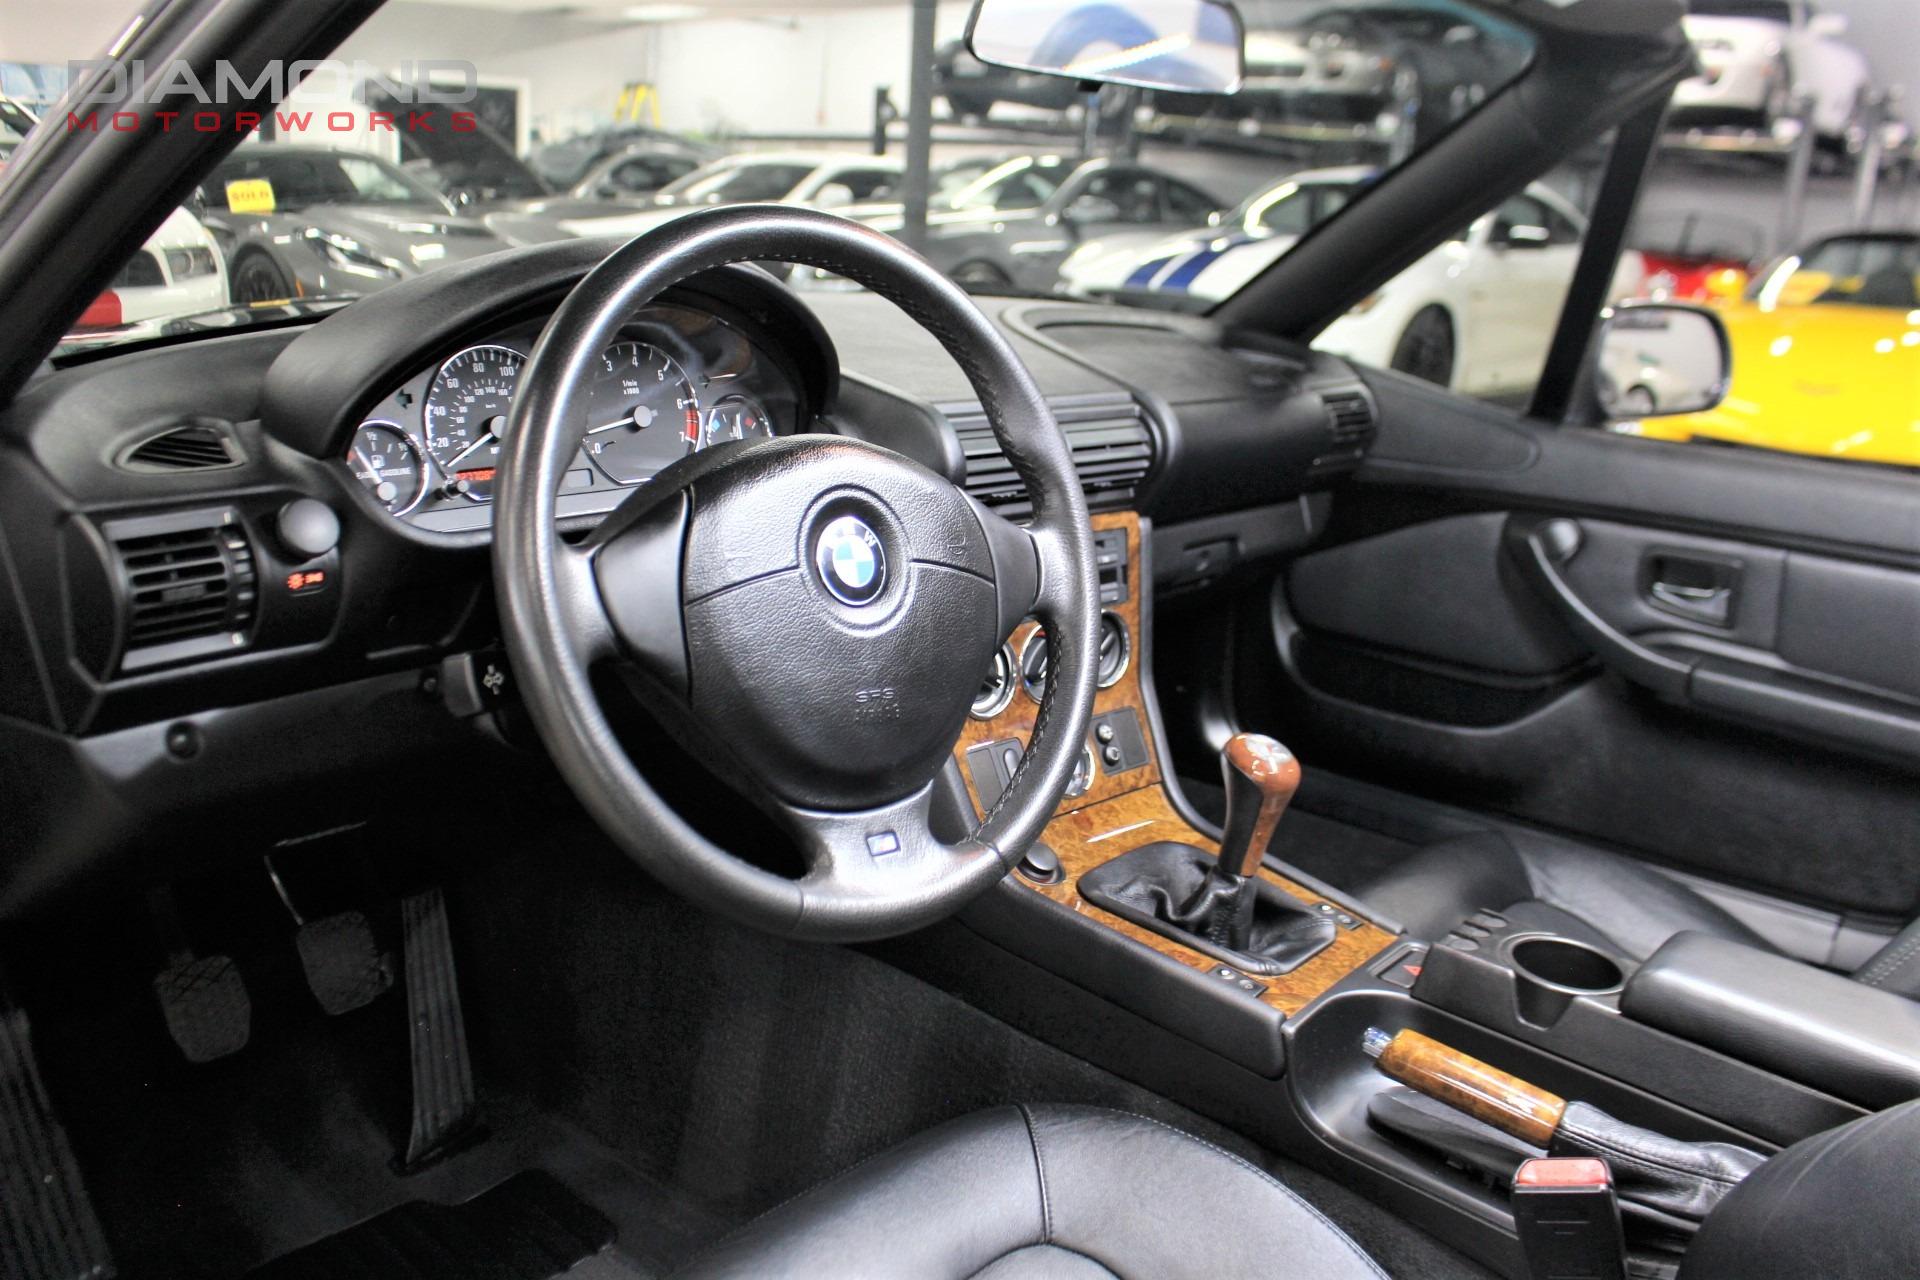 Used 2001 BMW Z3 3.0i For Sale (Sold) | Diamond Motorworks Stock 